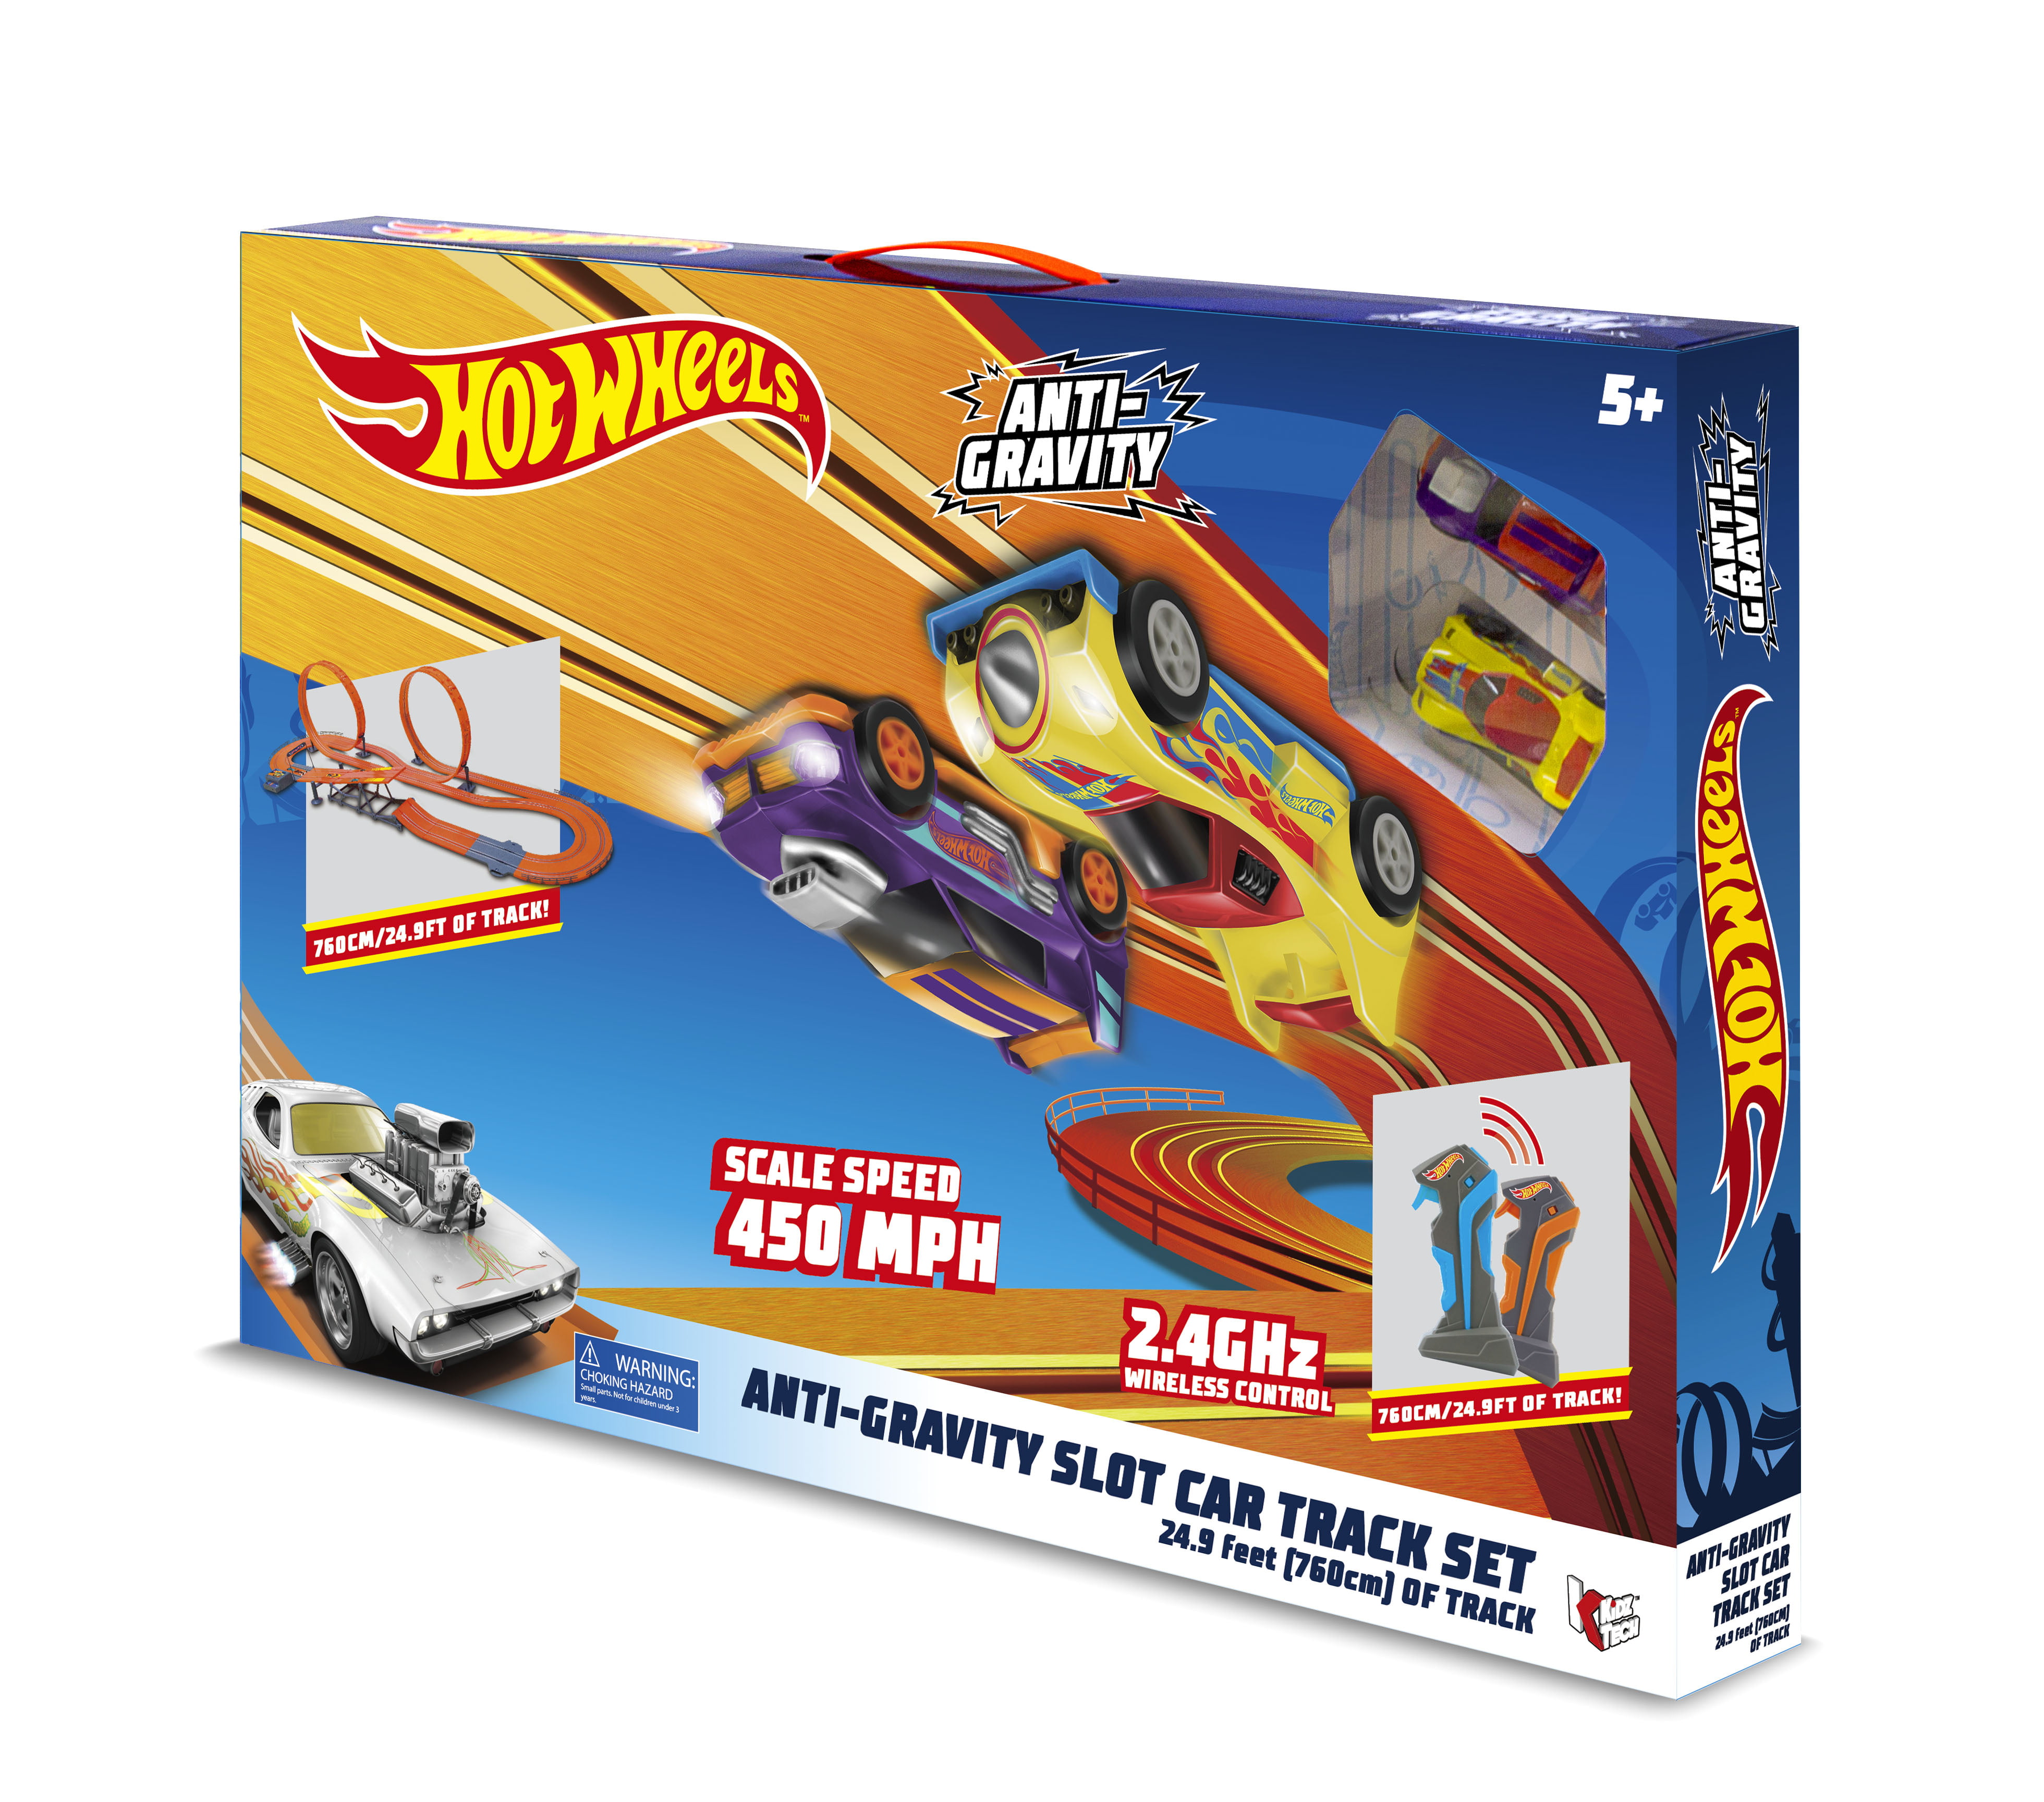 Hot Wheels Slot Car Track Set Beginner Level Big Ages 5 New Toy Play Boys Girl 